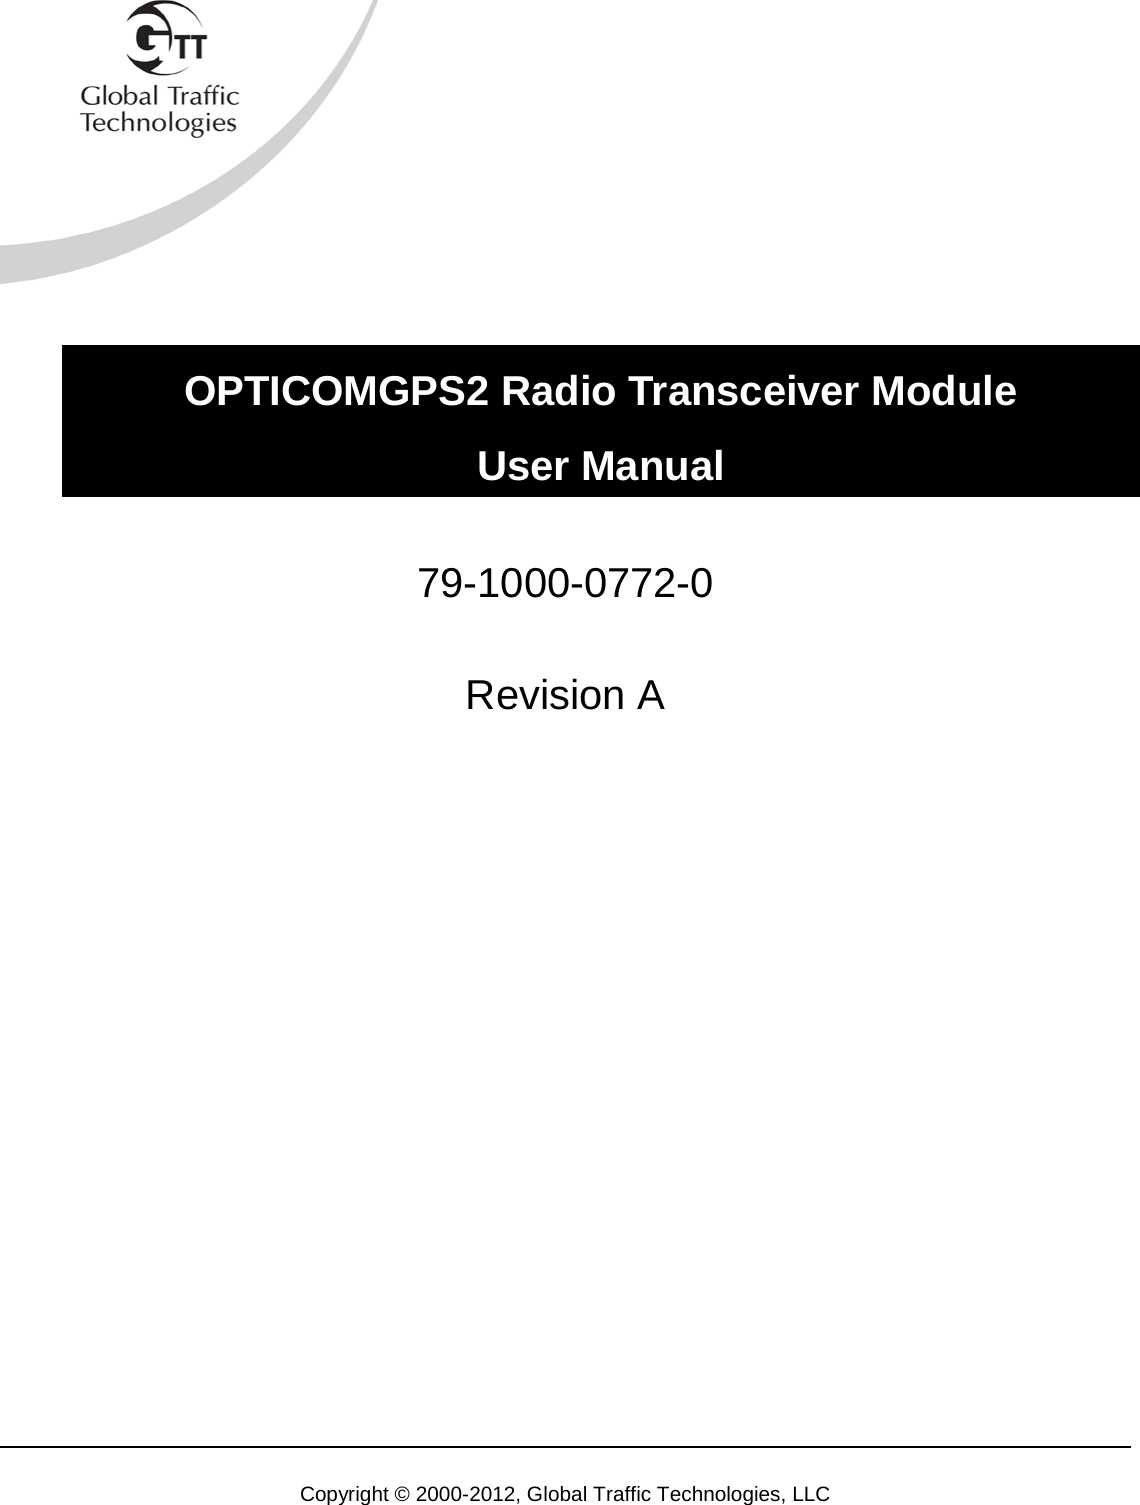   Copyright © 2000-2012, Global Traffic Technologies, LLC        79-1000-0772-0  Revision A                   OPTICOMGPS2 Radio Transceiver Module User Manual 